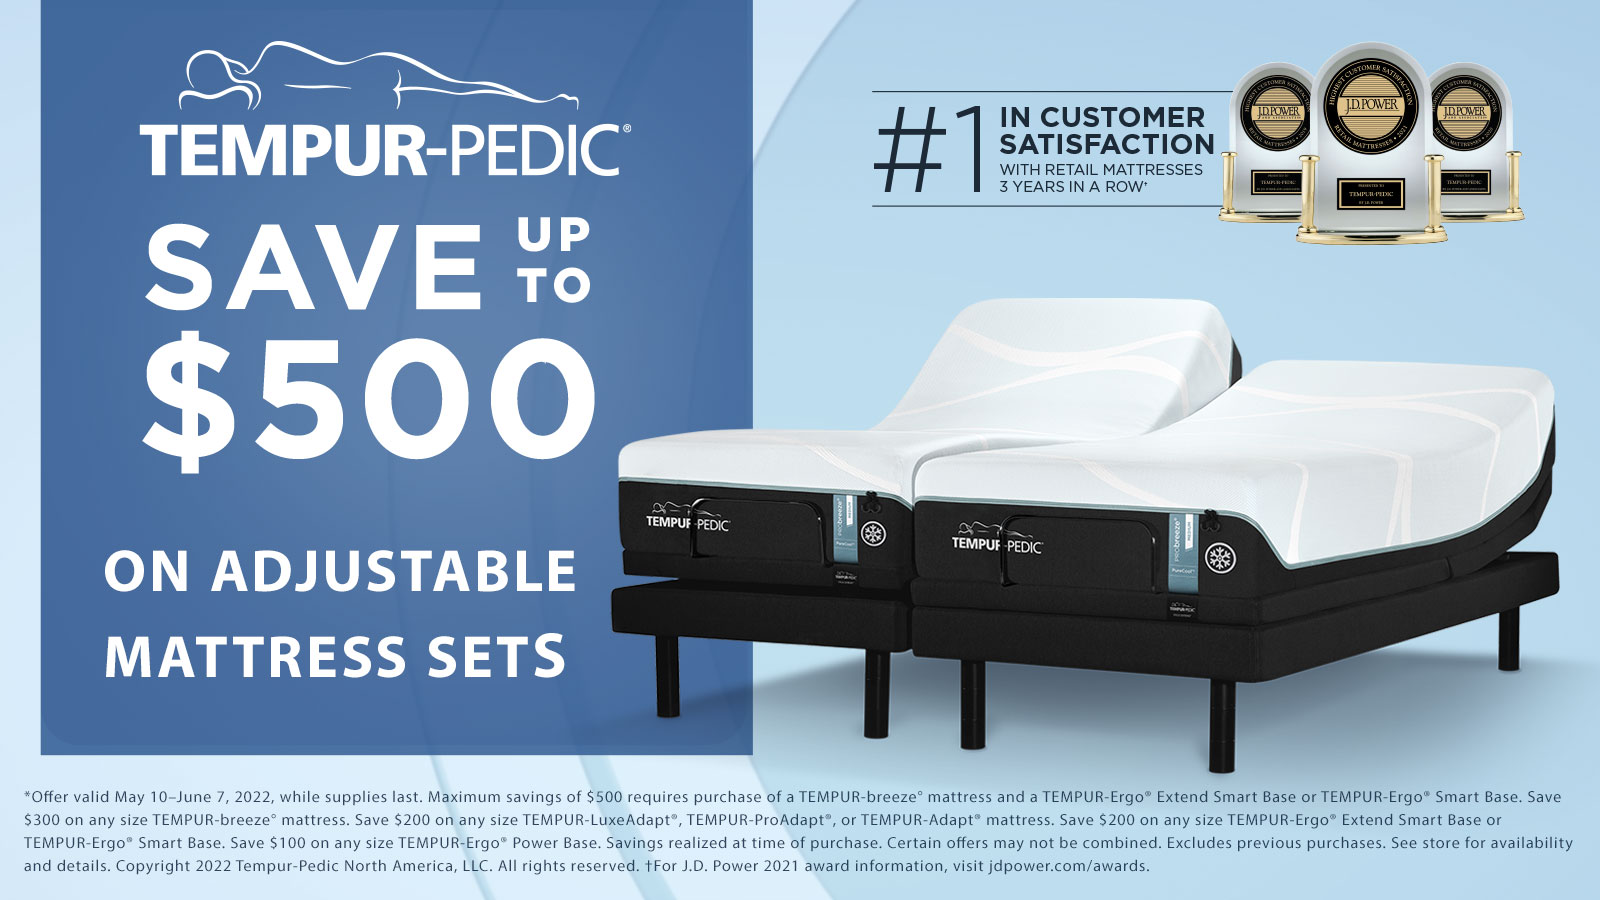 Save up to $500 on select Tempur-pedic adjustable mattress sets